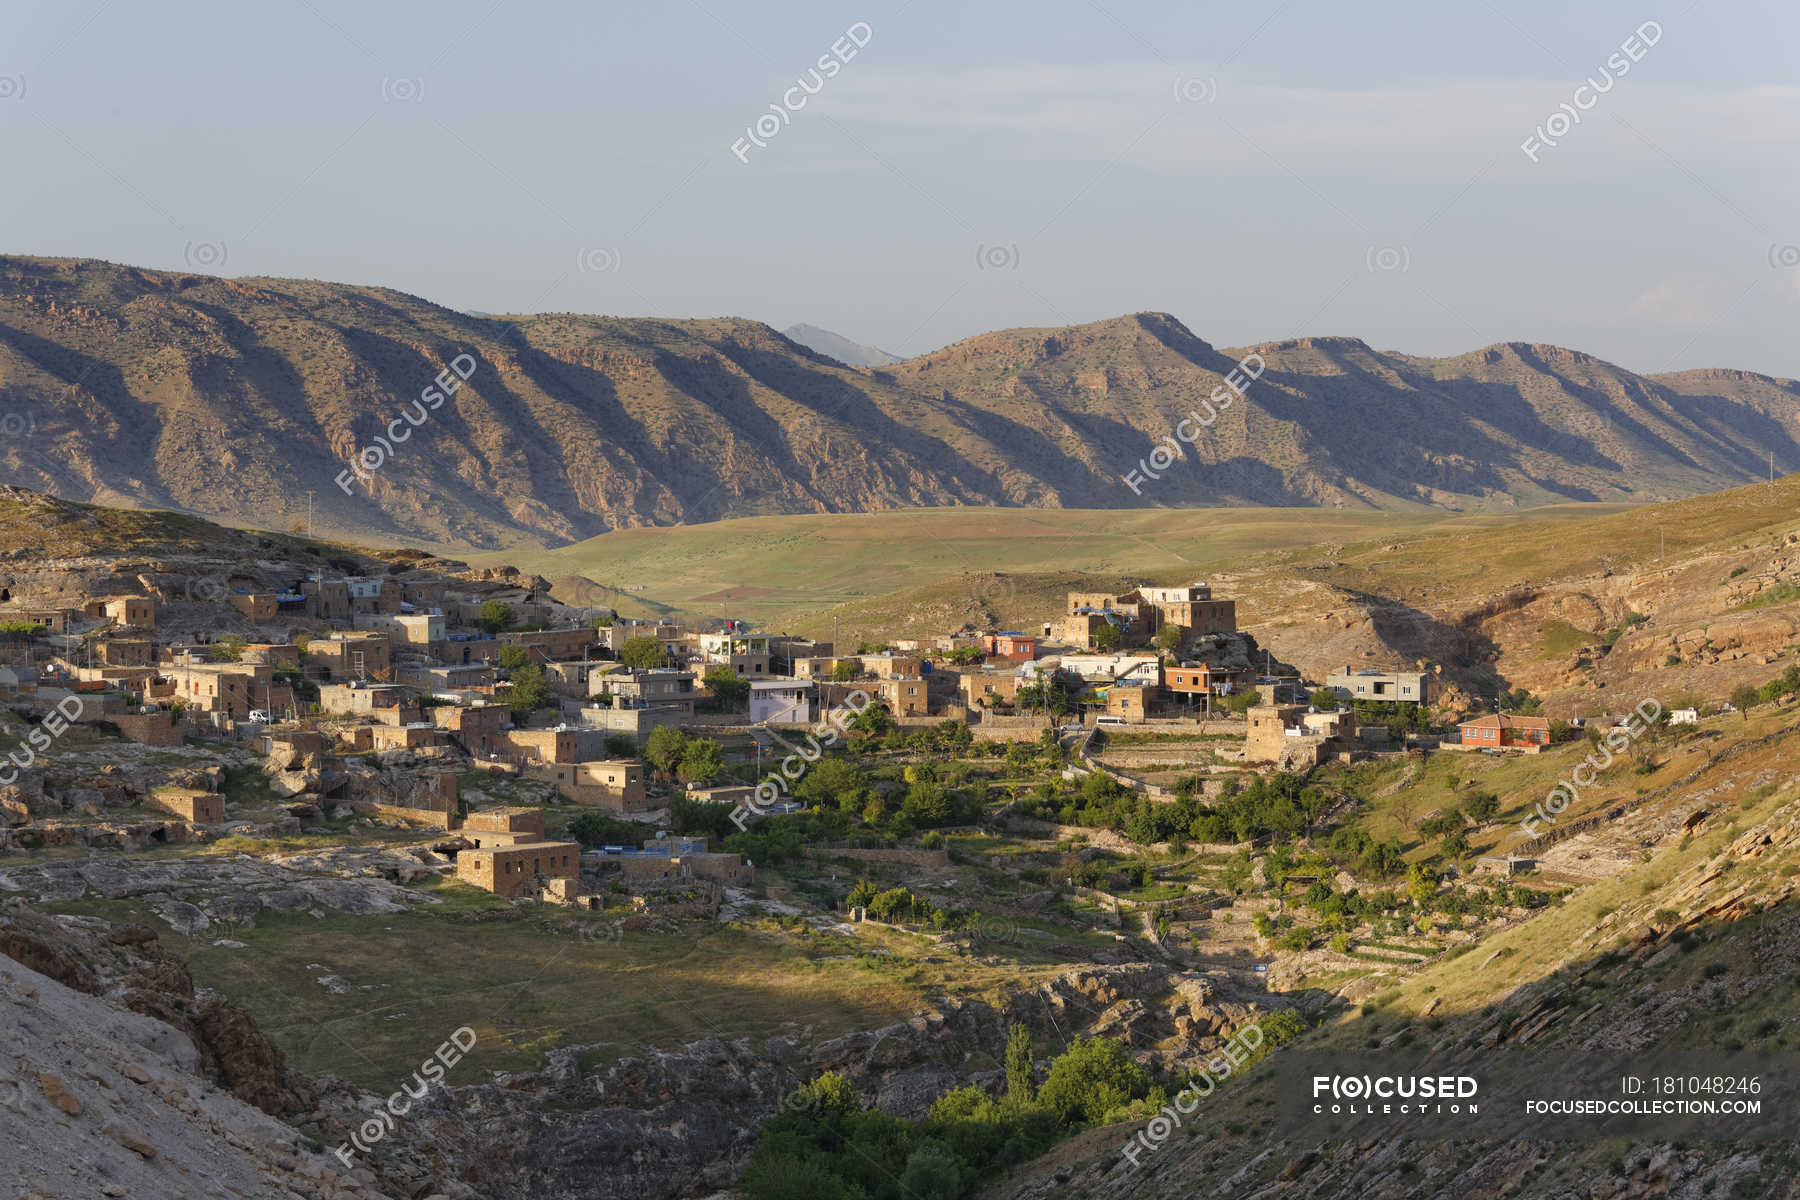 Turkey, Anatolia, South East Anatolia, Tur Abdin, Batman Province, village  Uecyol in the Tigris valley — travel, Color Image - Stock Photo | #181048246